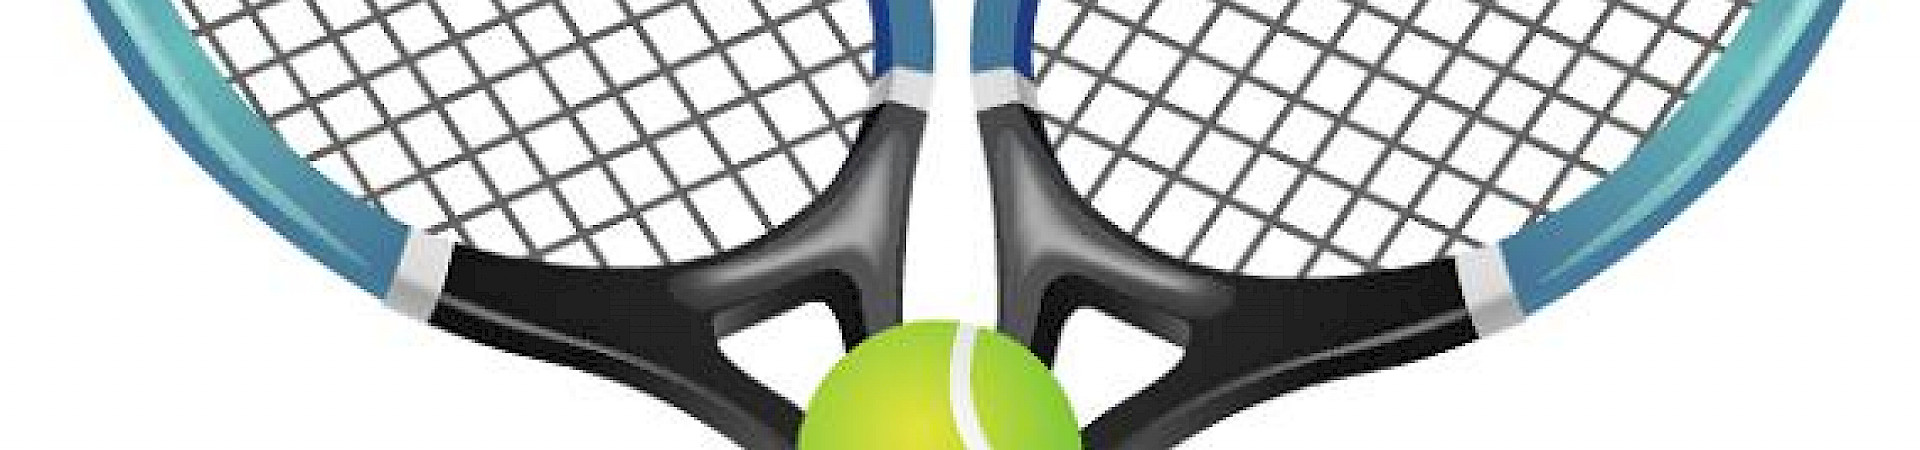 Finley Tennis Club image